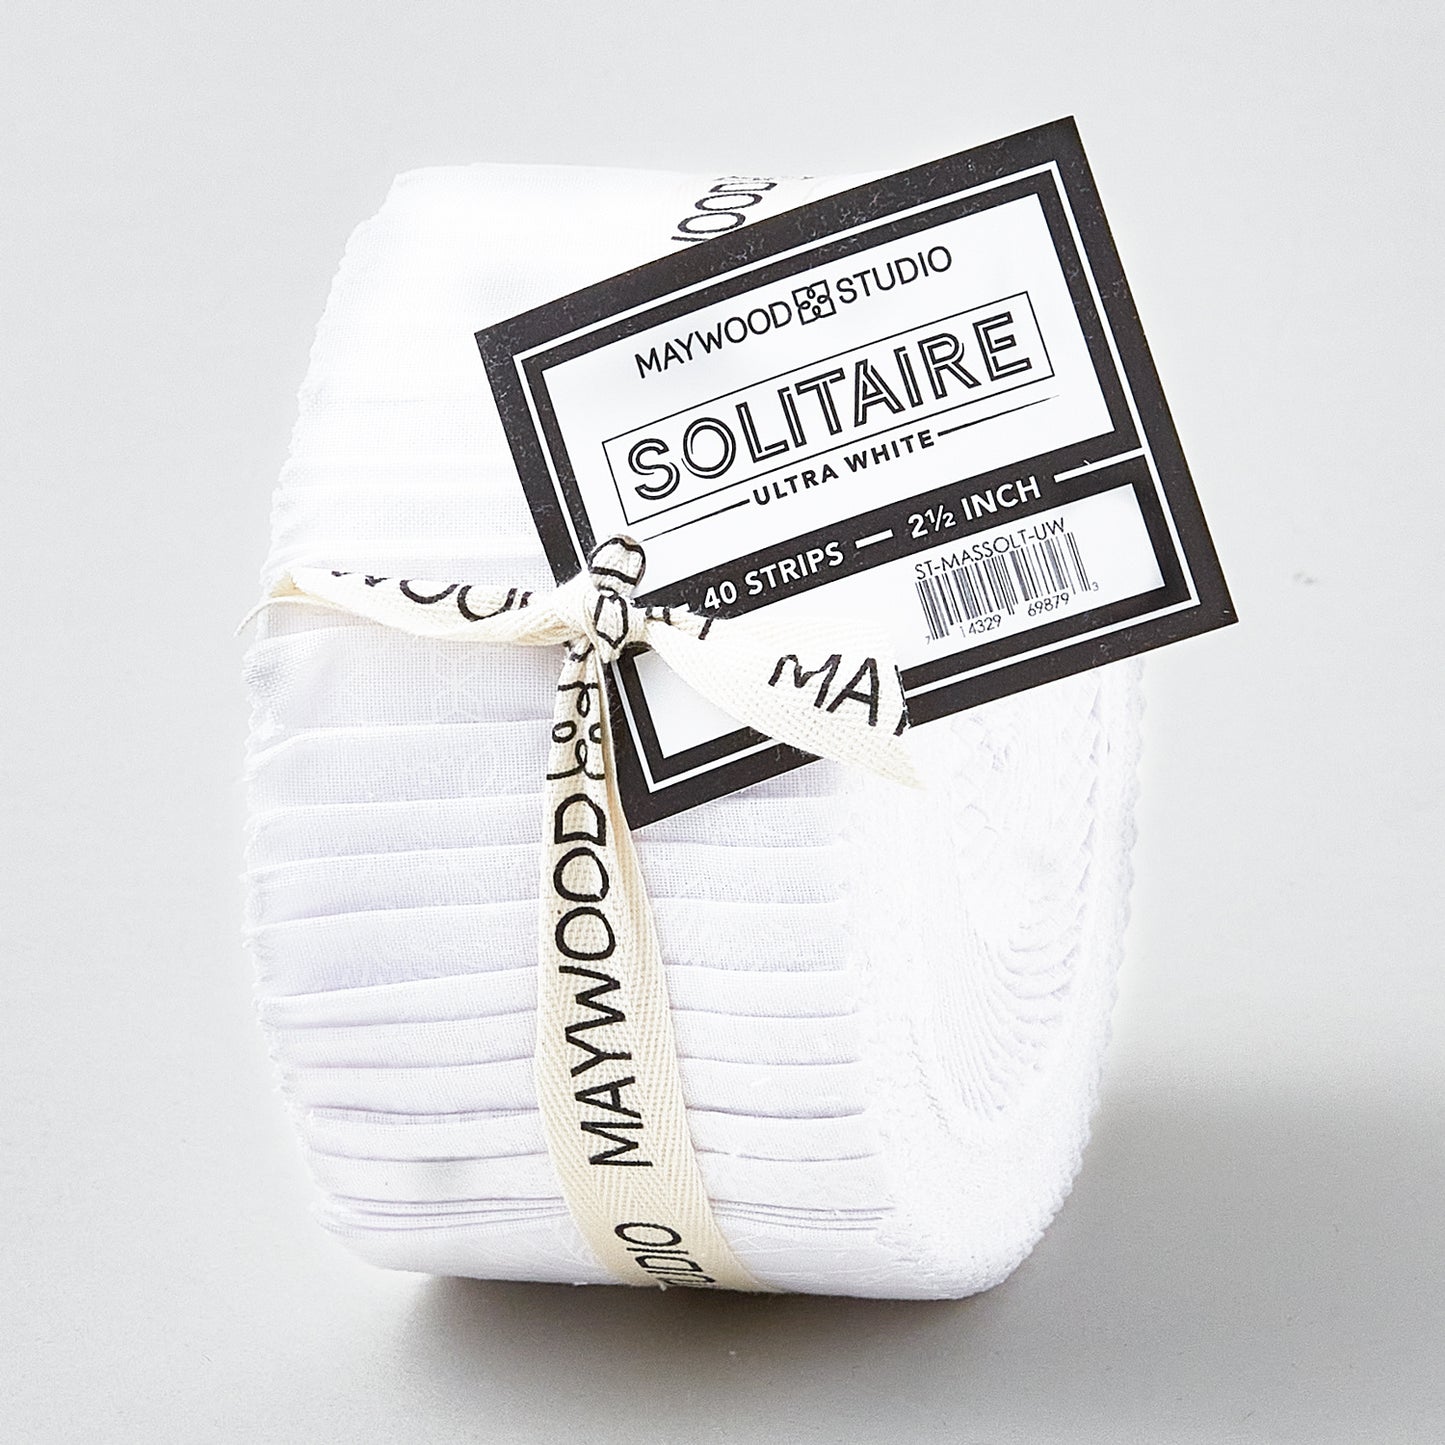 Solitaire Whites - Ultra White - 2 1/2" Strips Alternative View #1